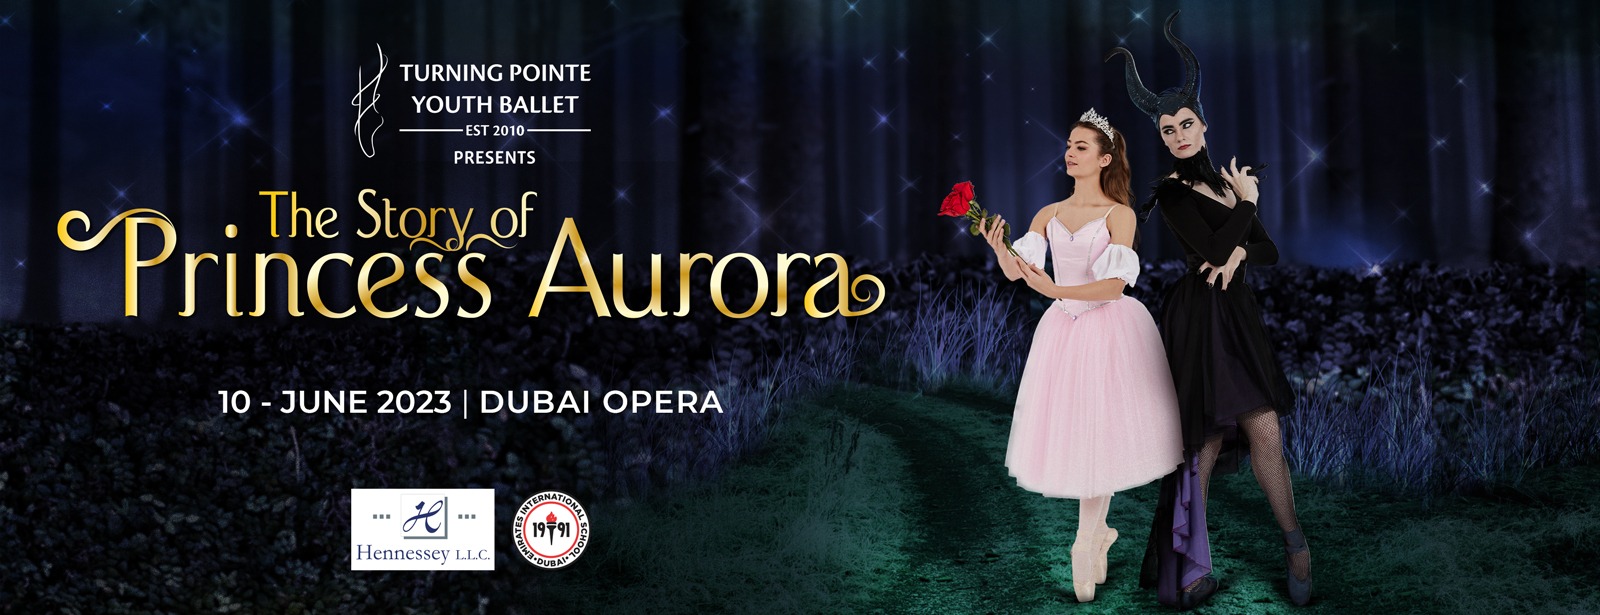 The Story of Princess Aurora in Dubai Opera - Coming Soon in UAE